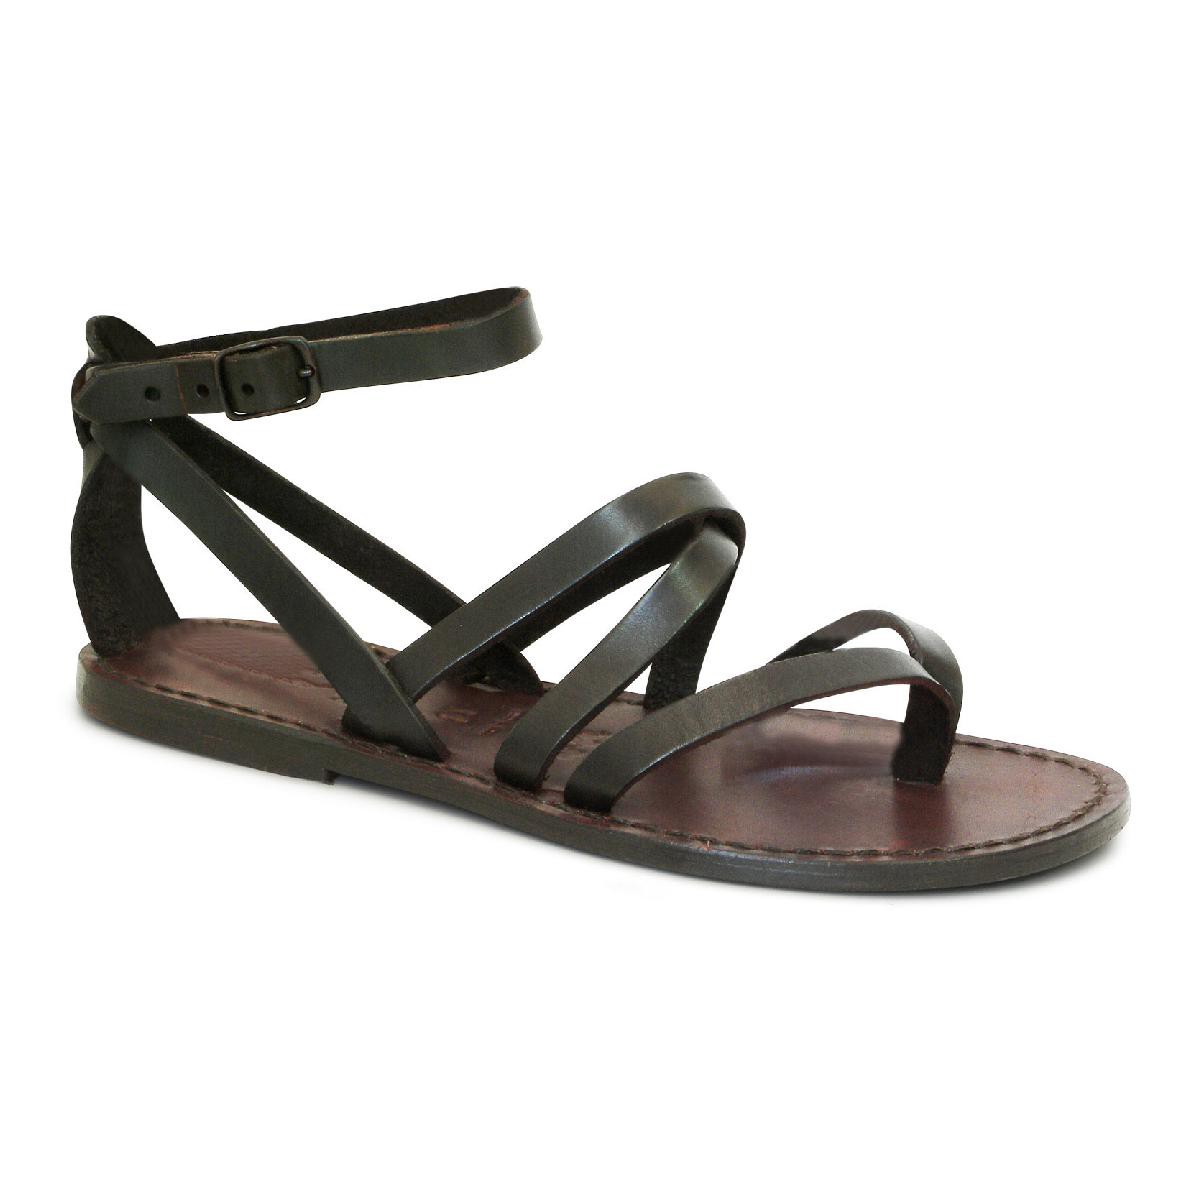 Italian strappy sandals women handmade in brown leather | Gianluca ...